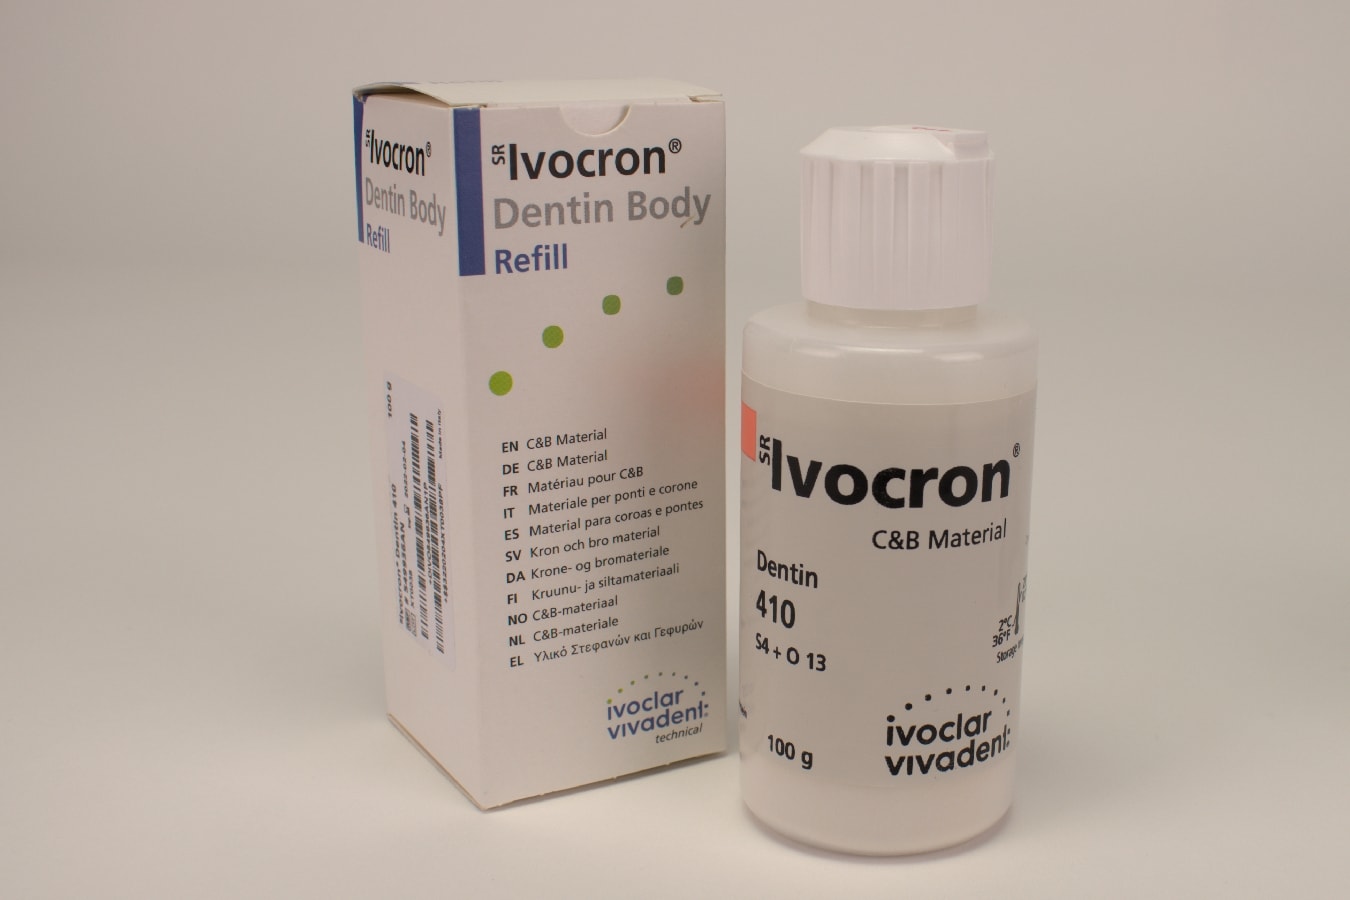 Ivocron Dentin 410/4A 100g